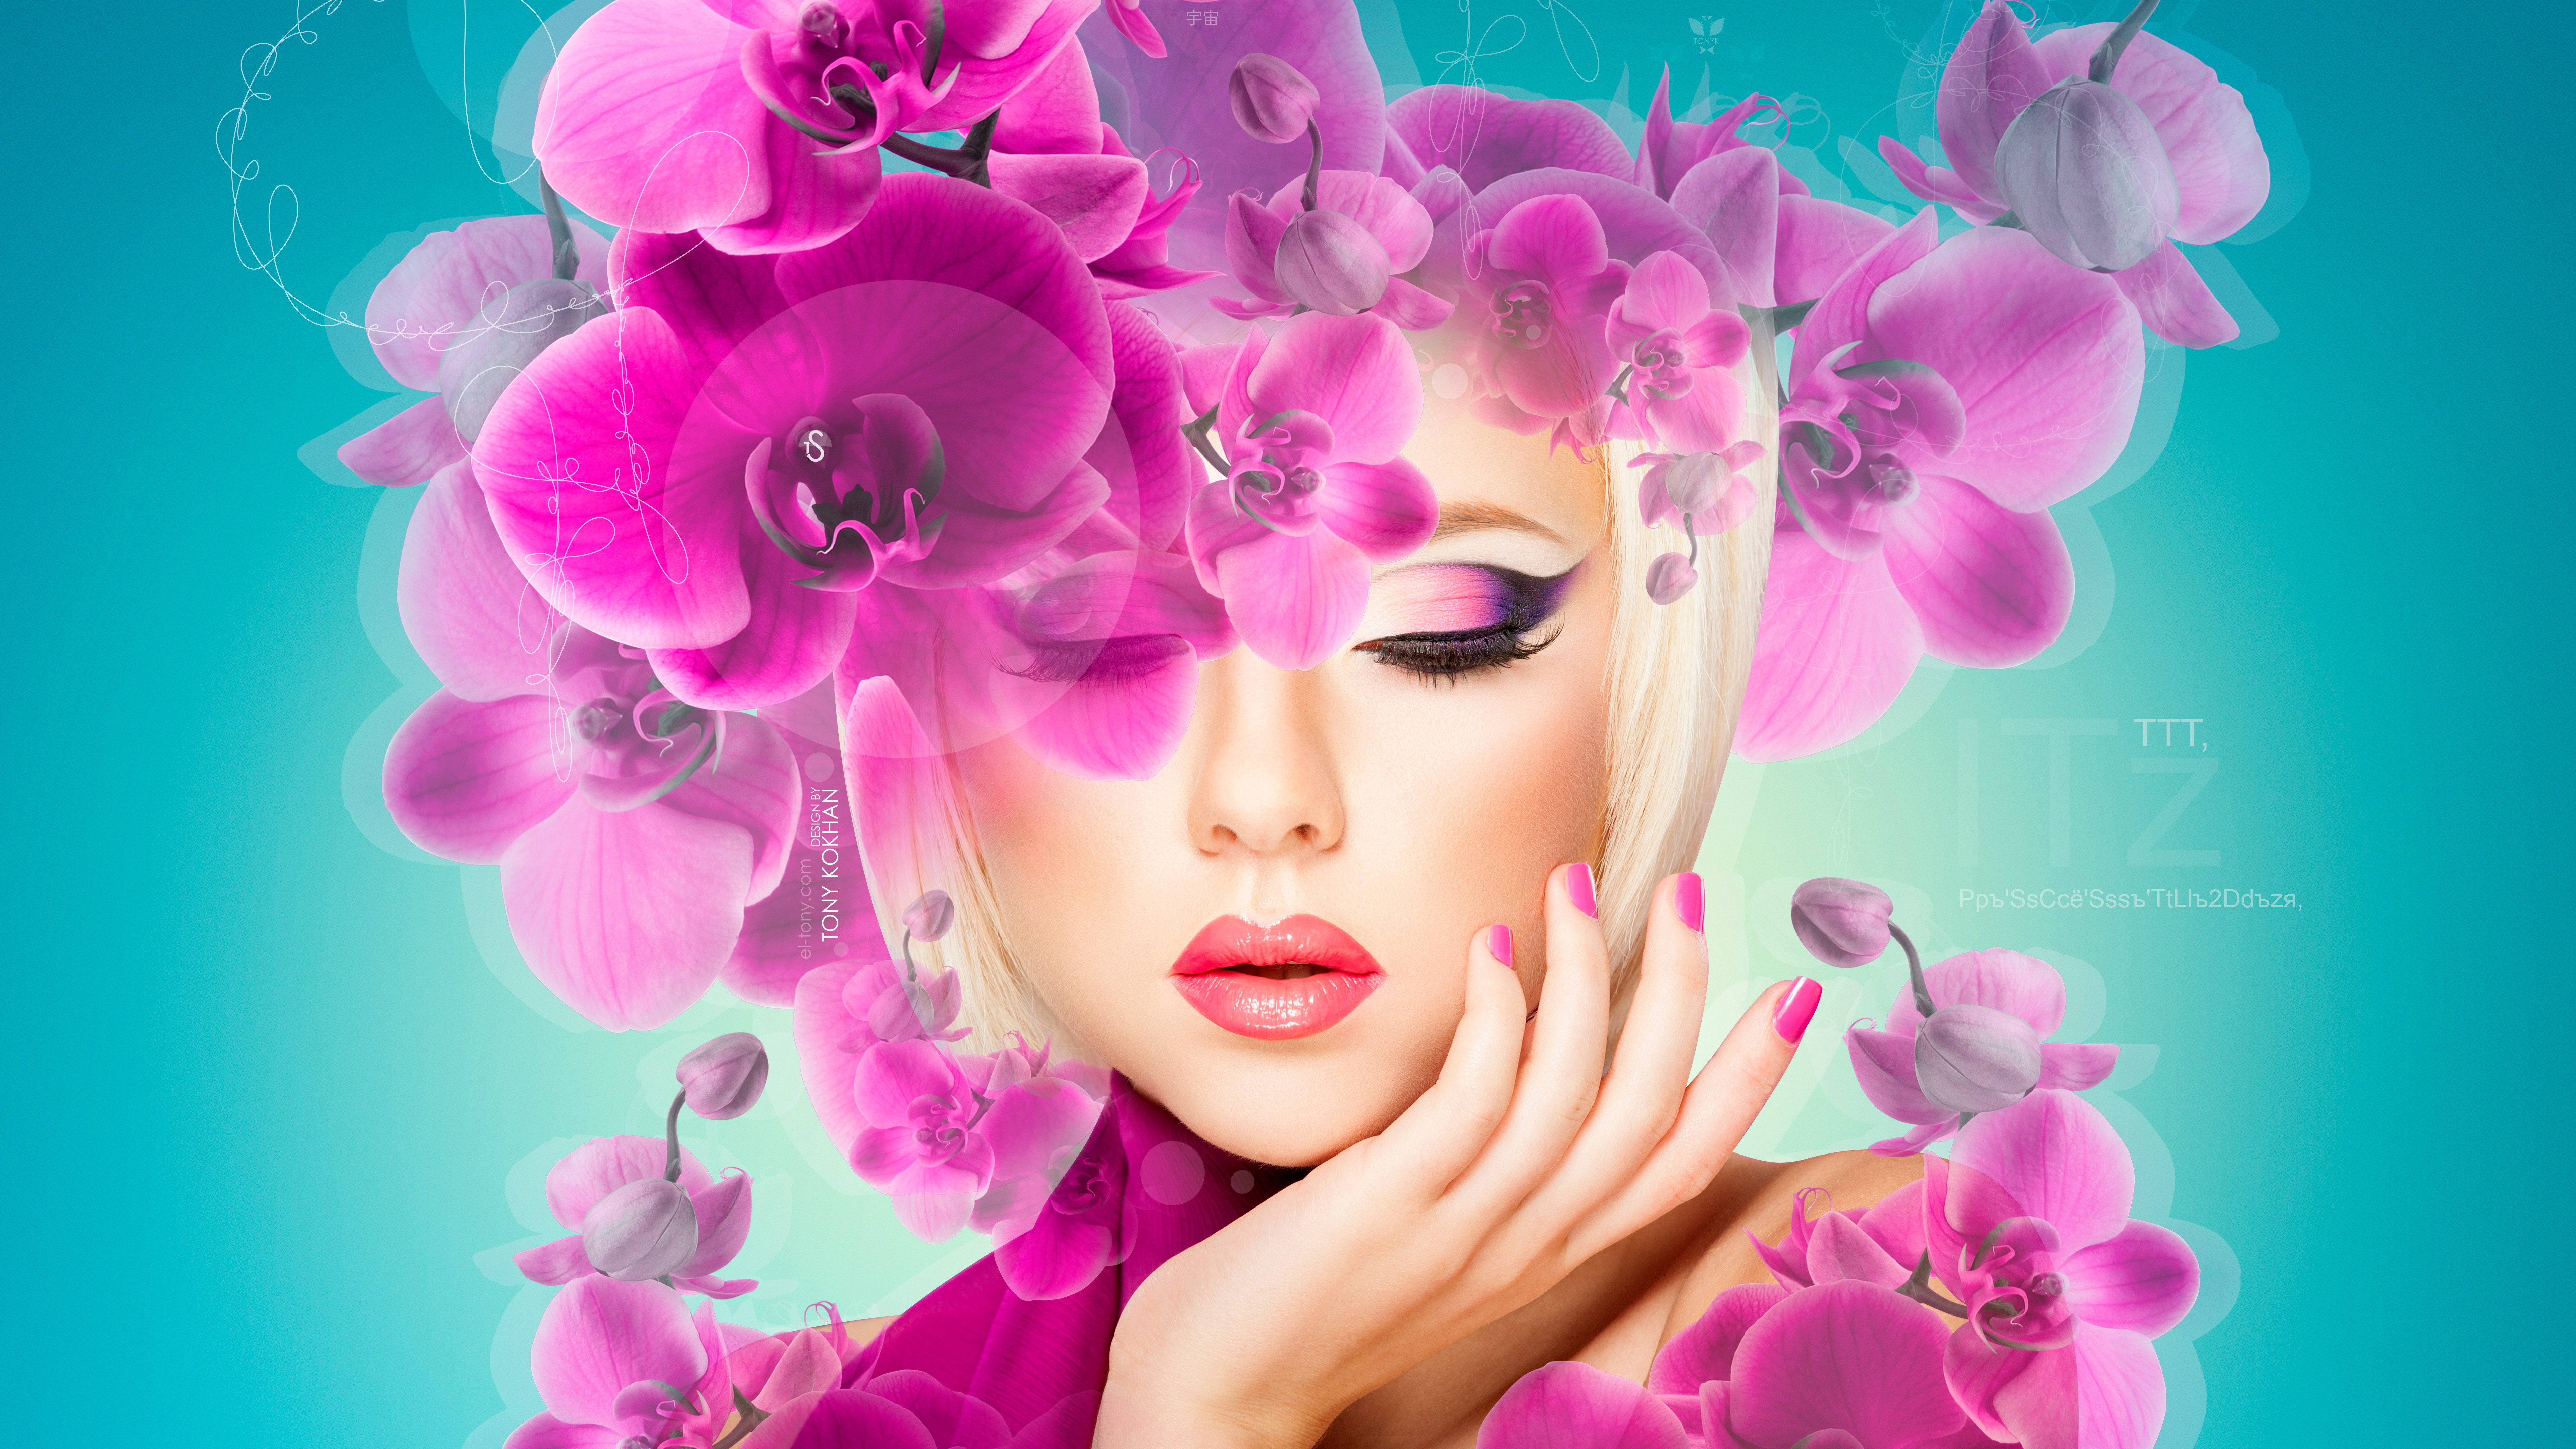 Fashion-Girl-SuitDdLlEez-Creative-Tech-TonykSssitDd-Flowers-Orchid-TonyWindows-Art